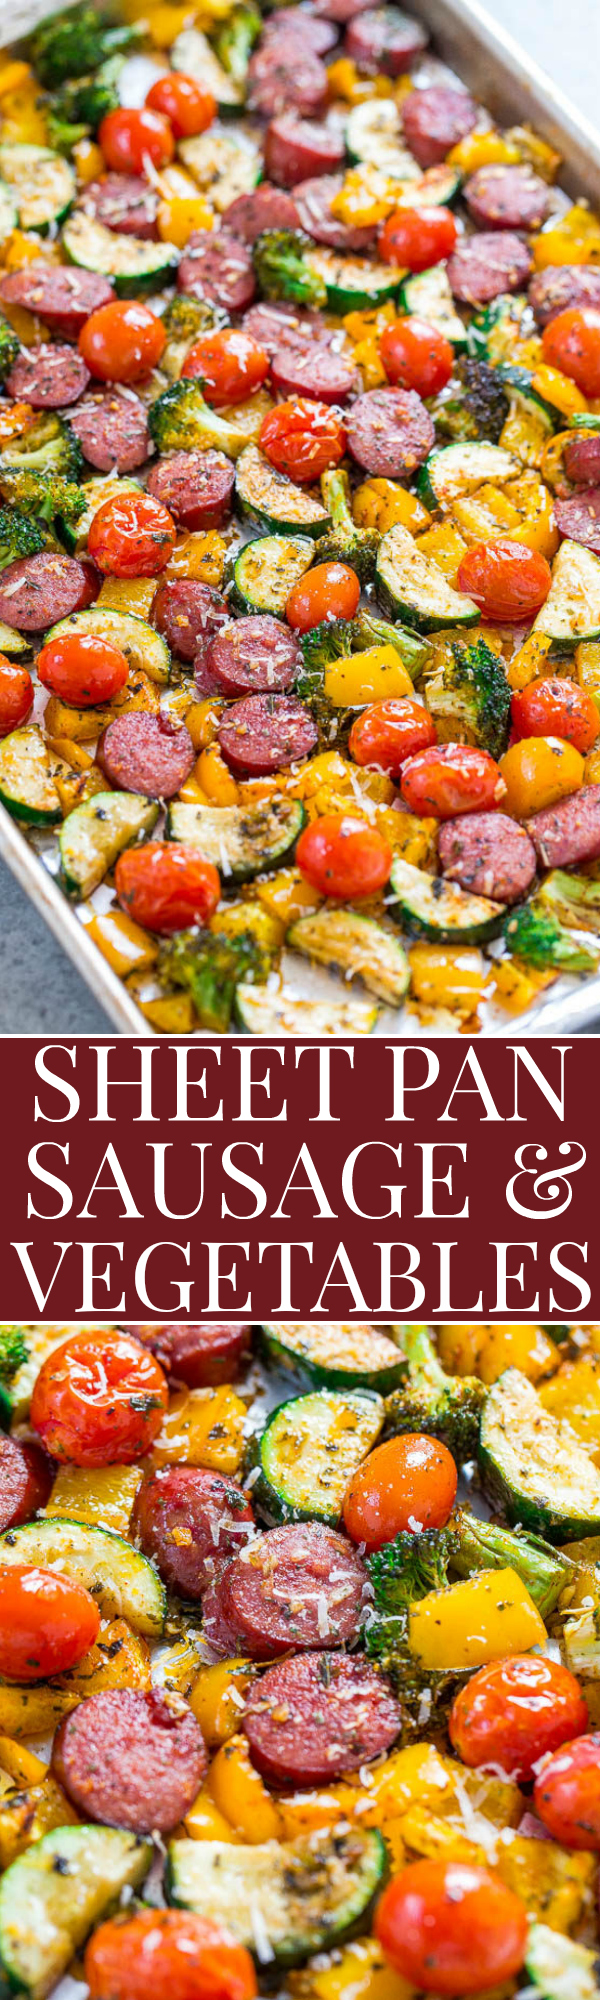 Sheet Pan Sausage and Veggies - The Girl Who Ate Everything